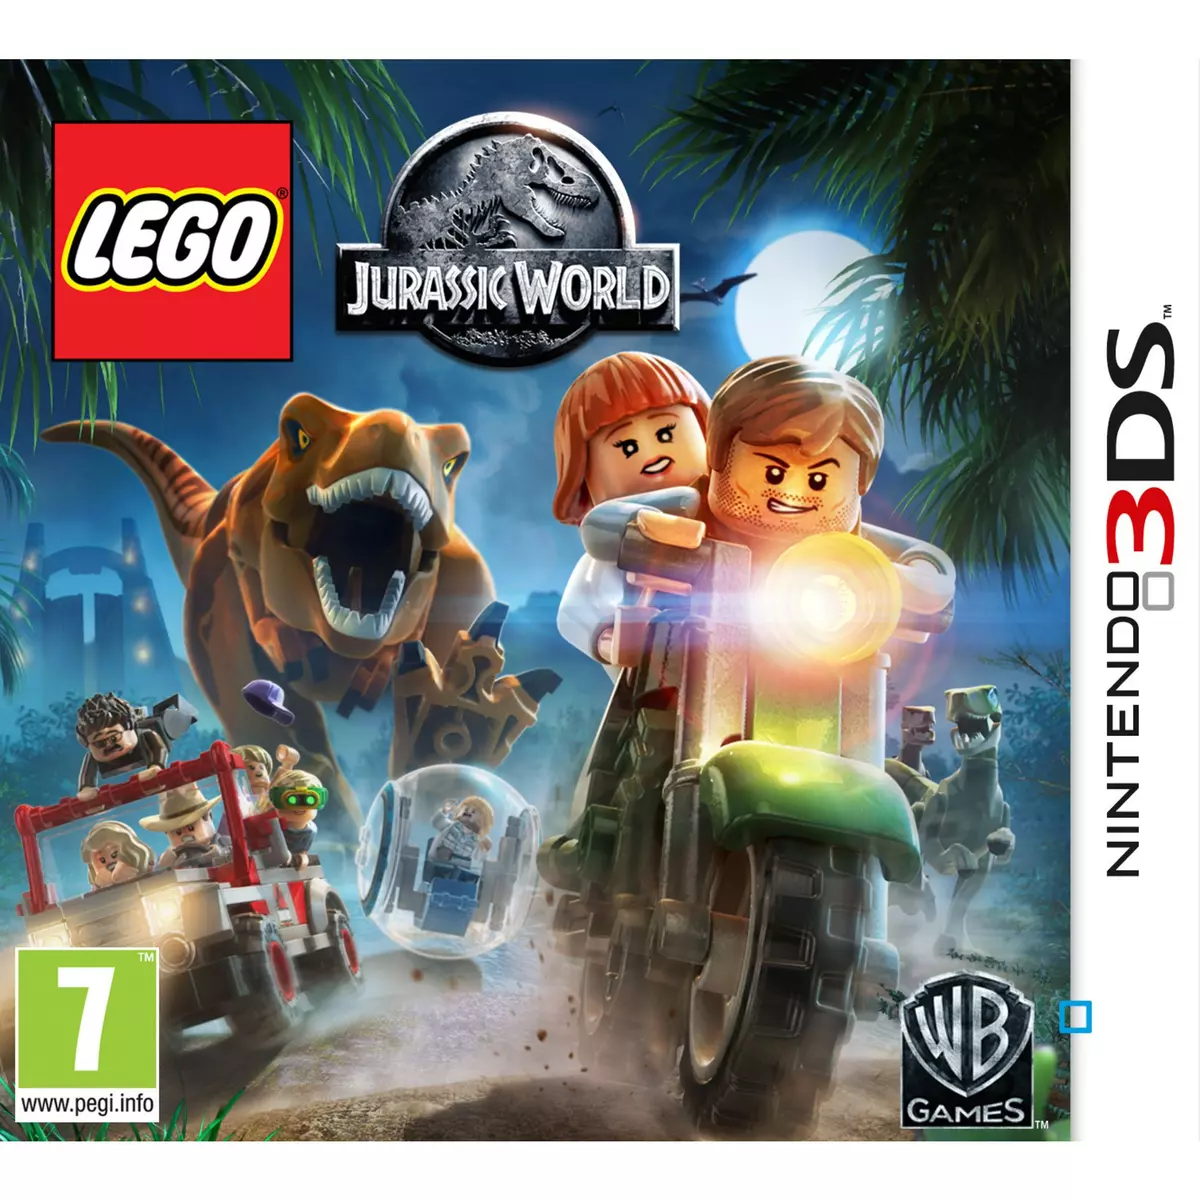 LEGO Jurassic World 3DS